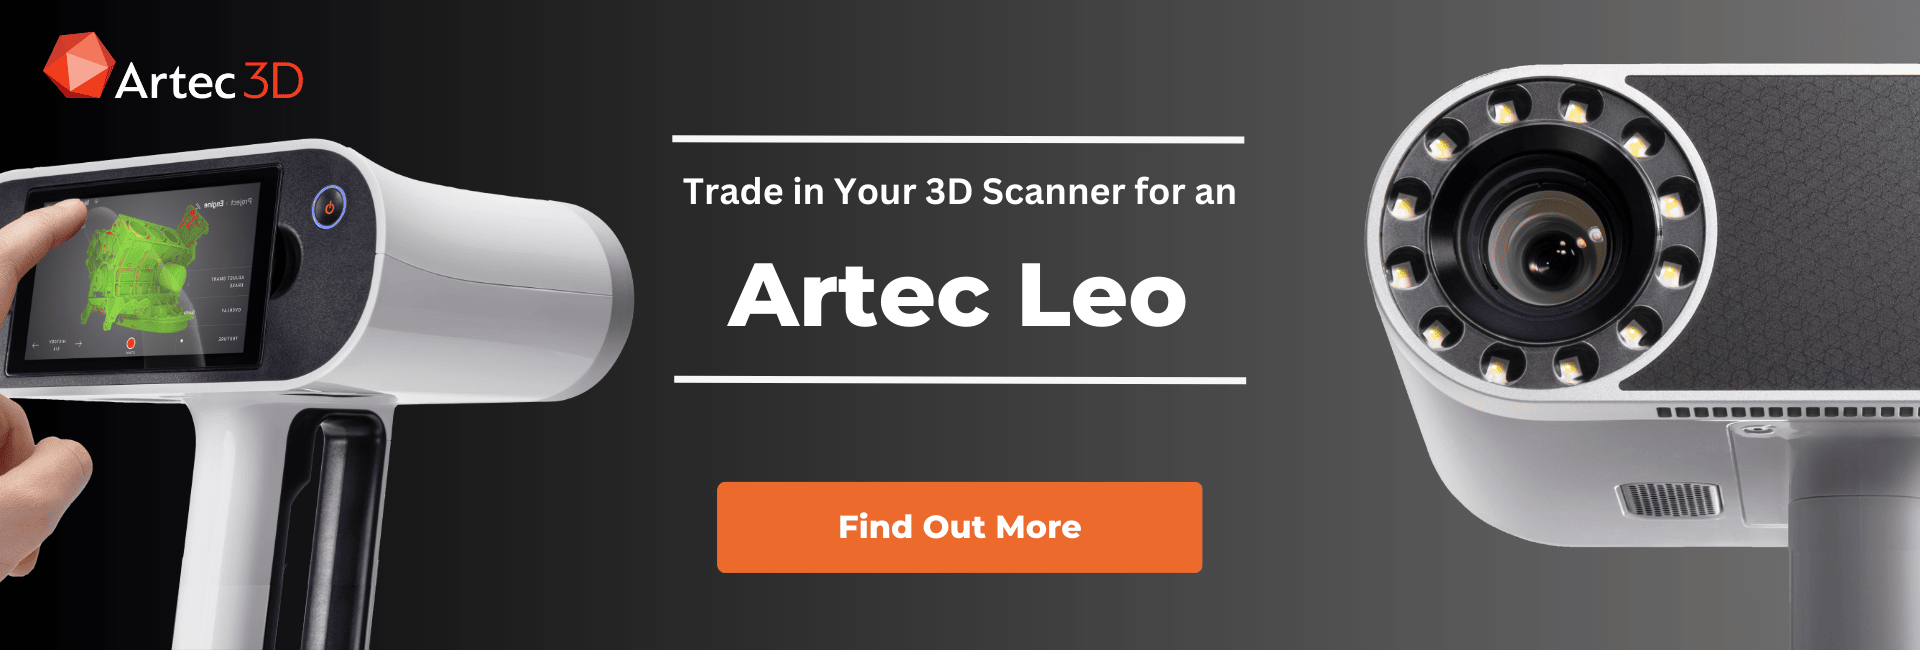 Upgrade to an Artec Leo 3D scanner